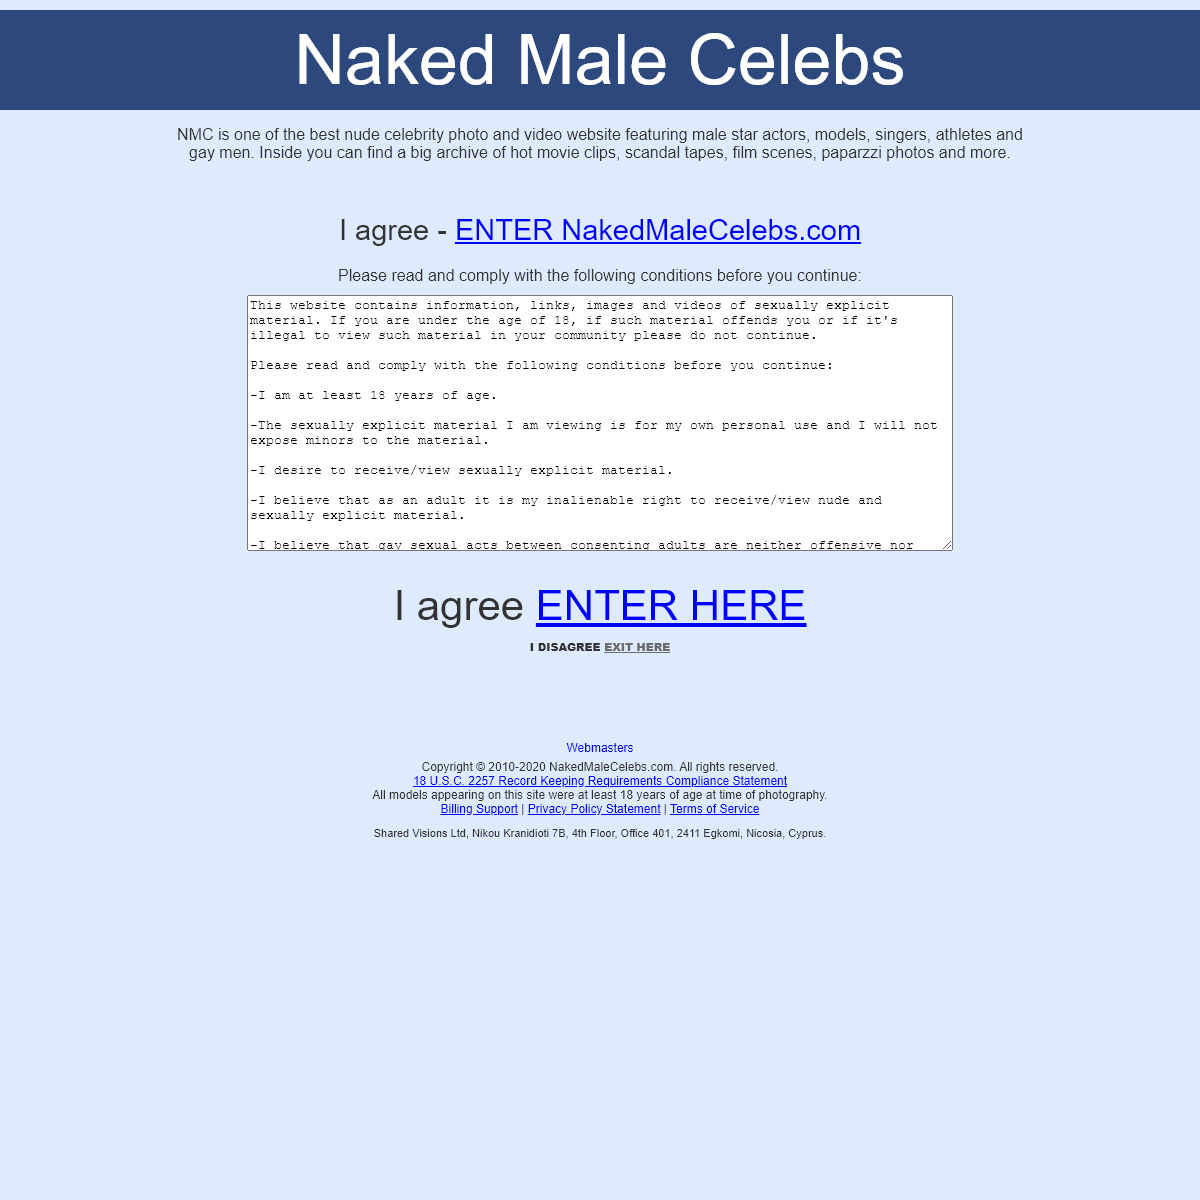 A complete backup of www.www.nakedmalecelebs.com